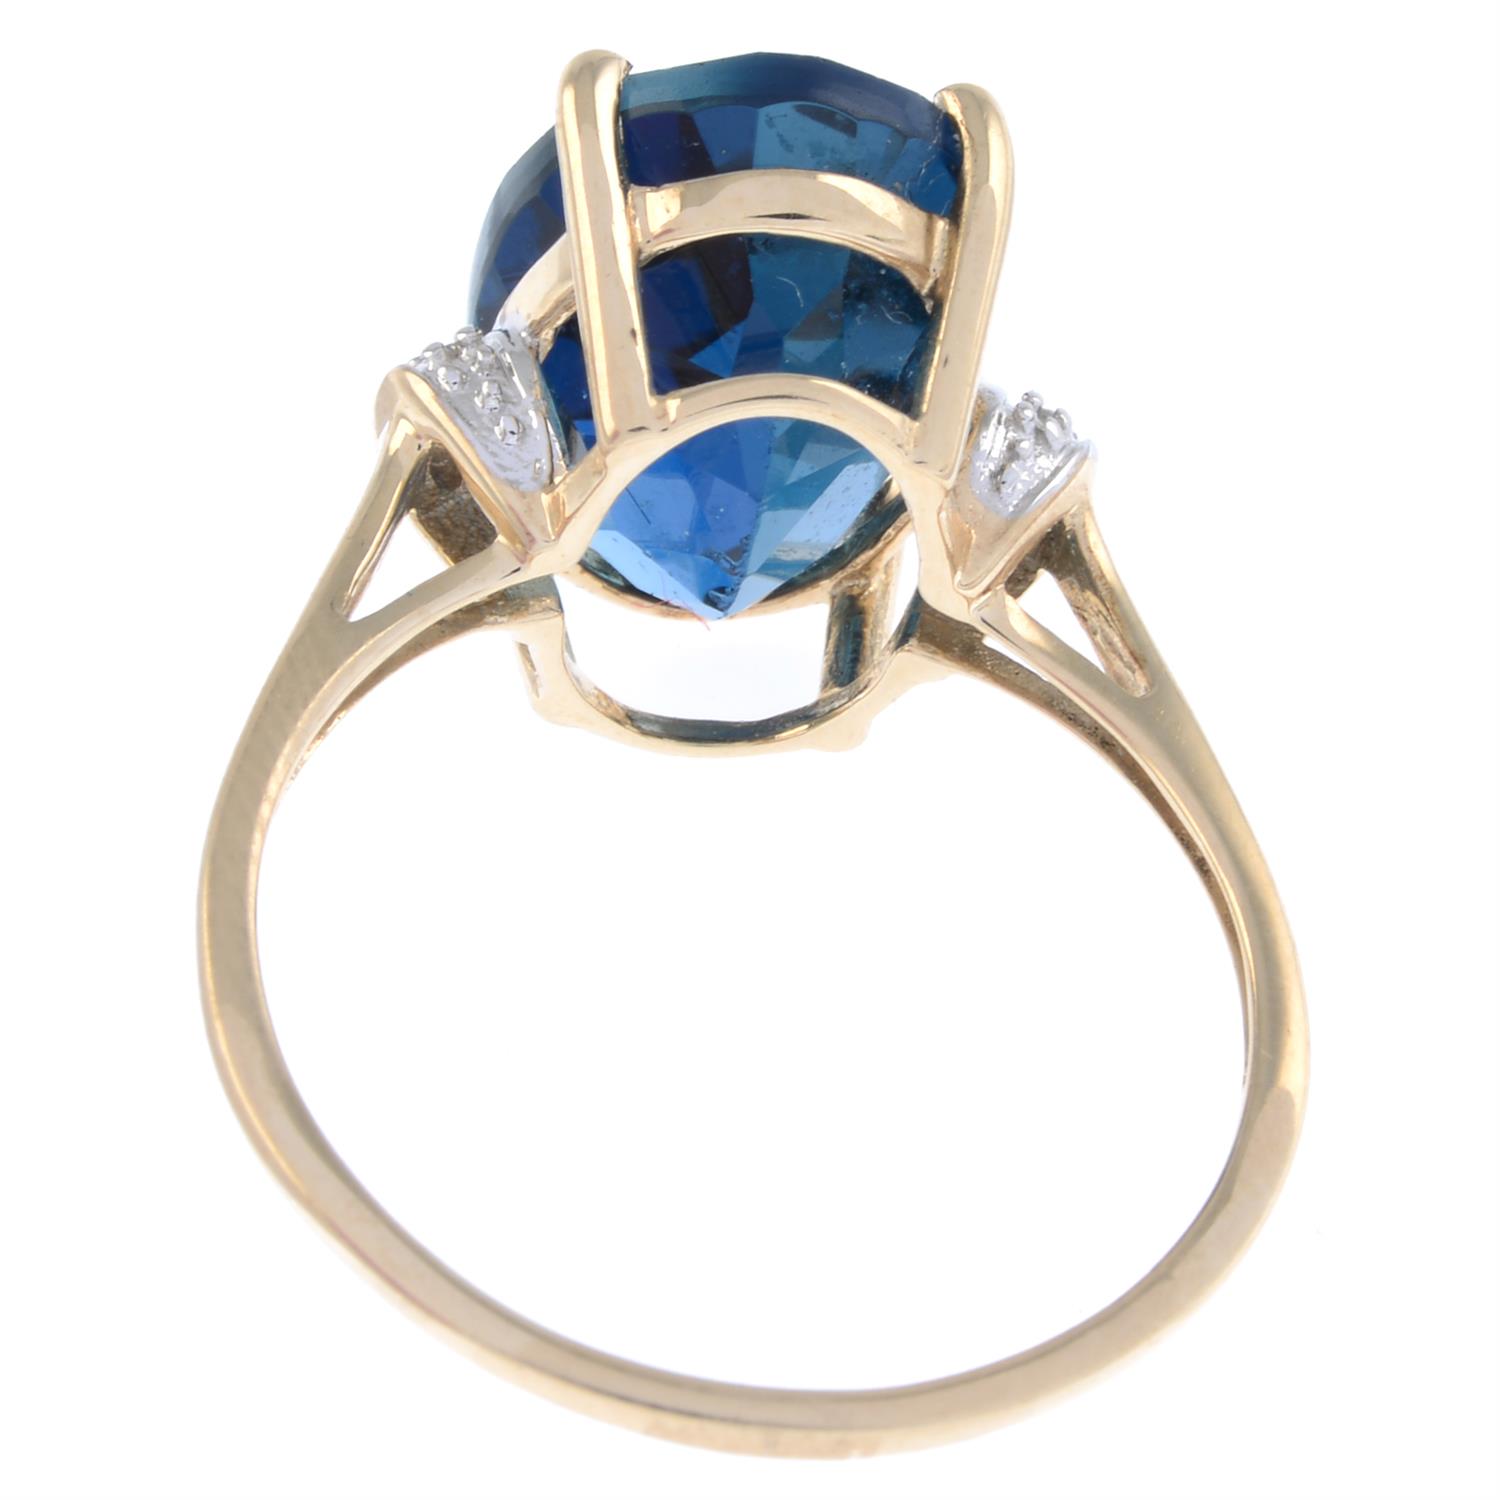 9ct gold blue topaz & diamond ring - Image 2 of 2